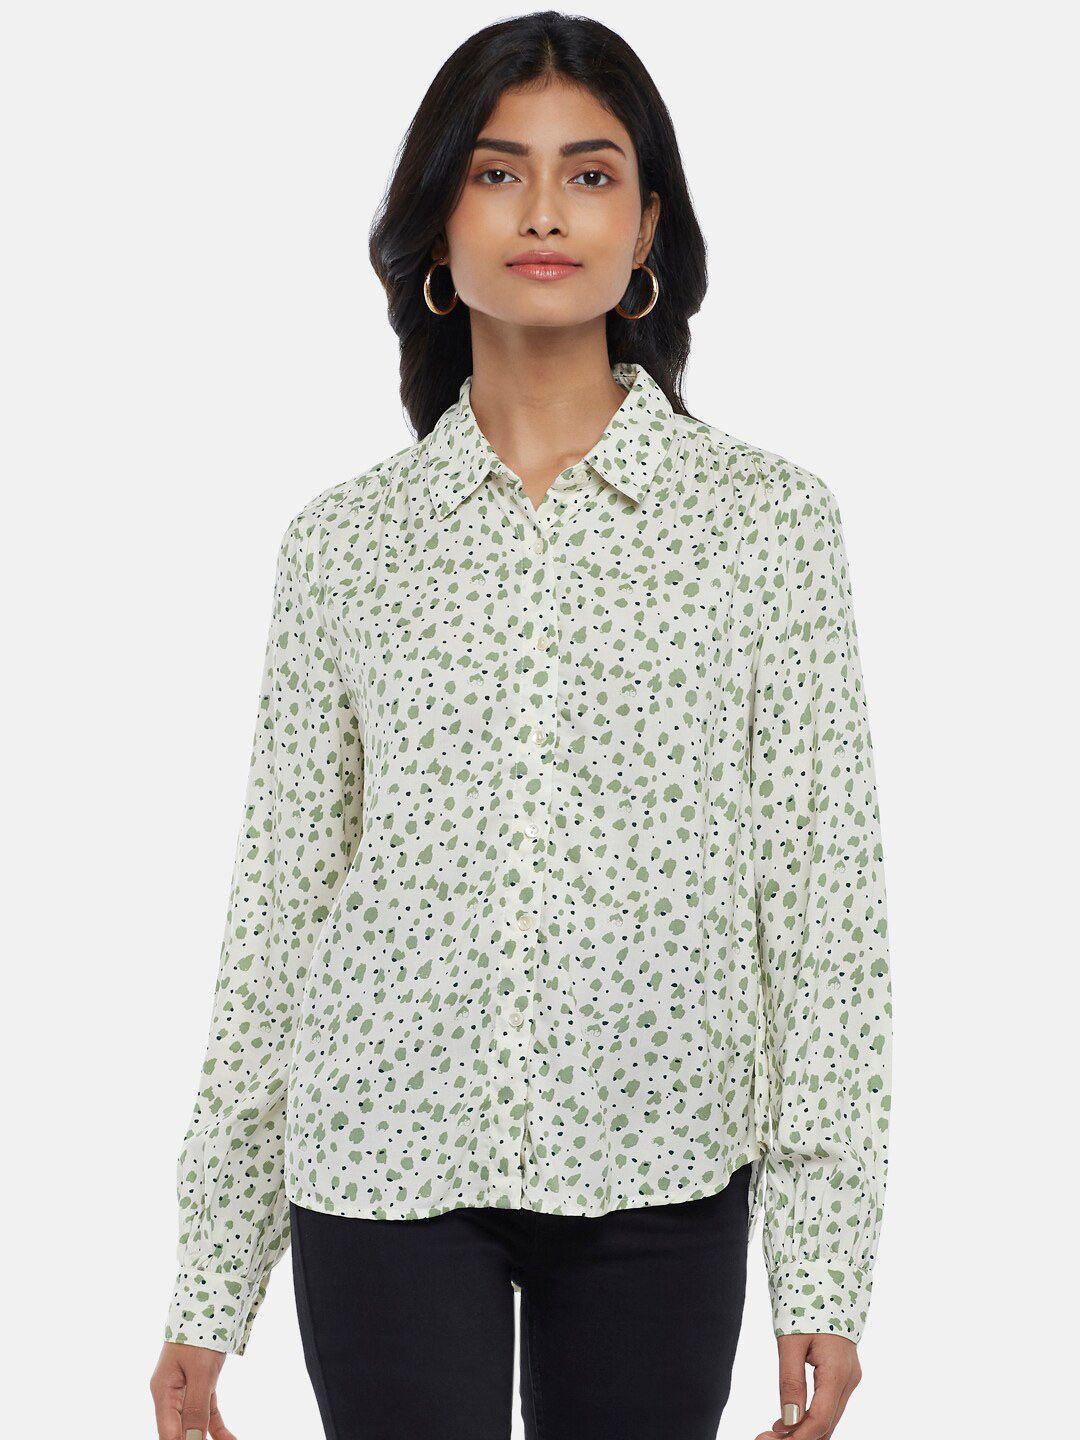 honey-by-pantaloons-women-green-floral-printed-casual-shirt